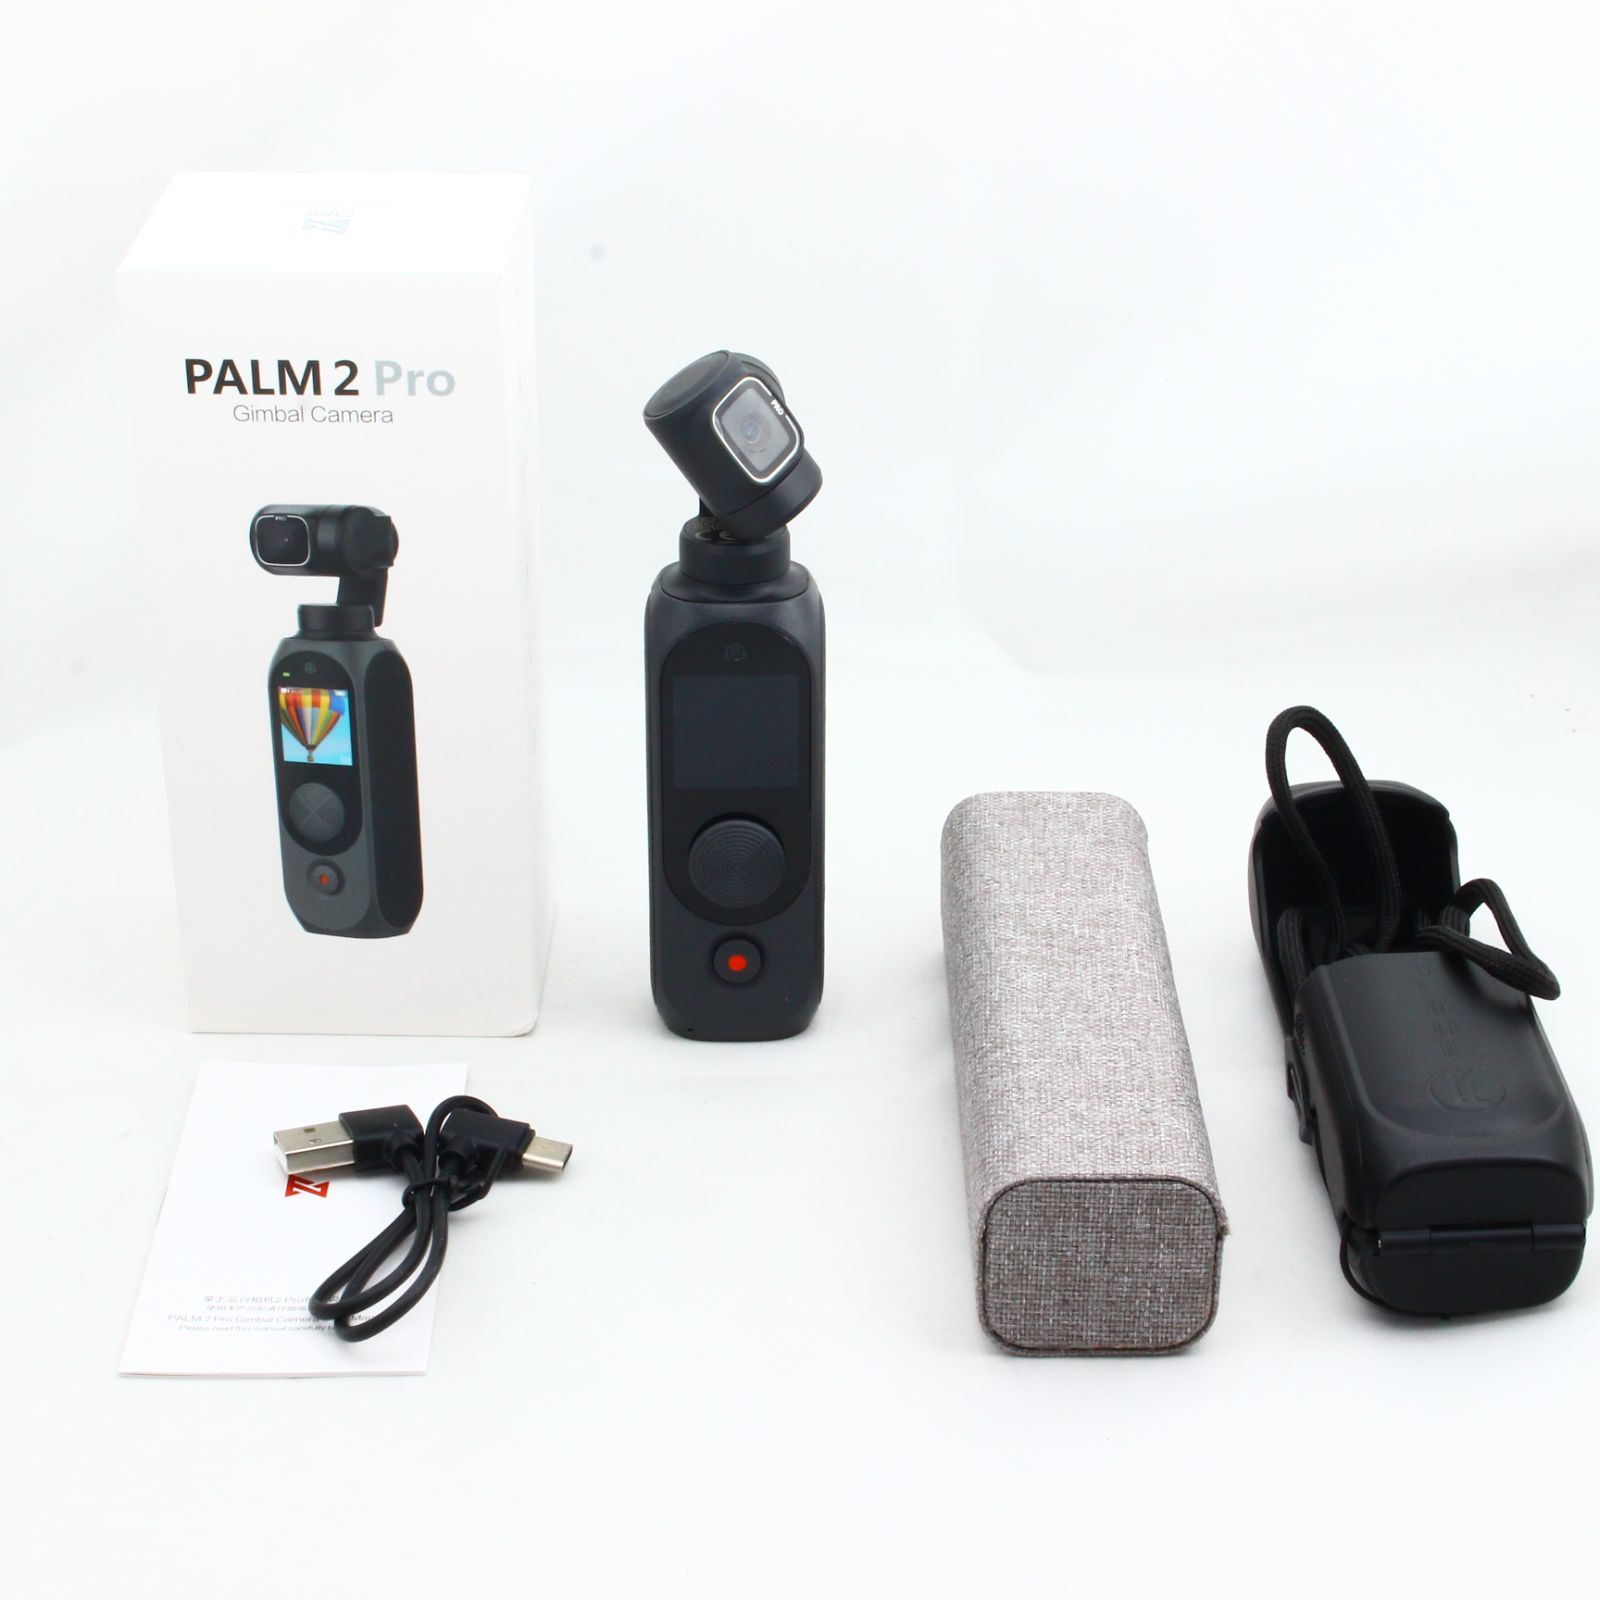 Fimi Palm 2 Pro ジンバルカメラ - M&T Camera【カメラ専門店】 - メルカリ